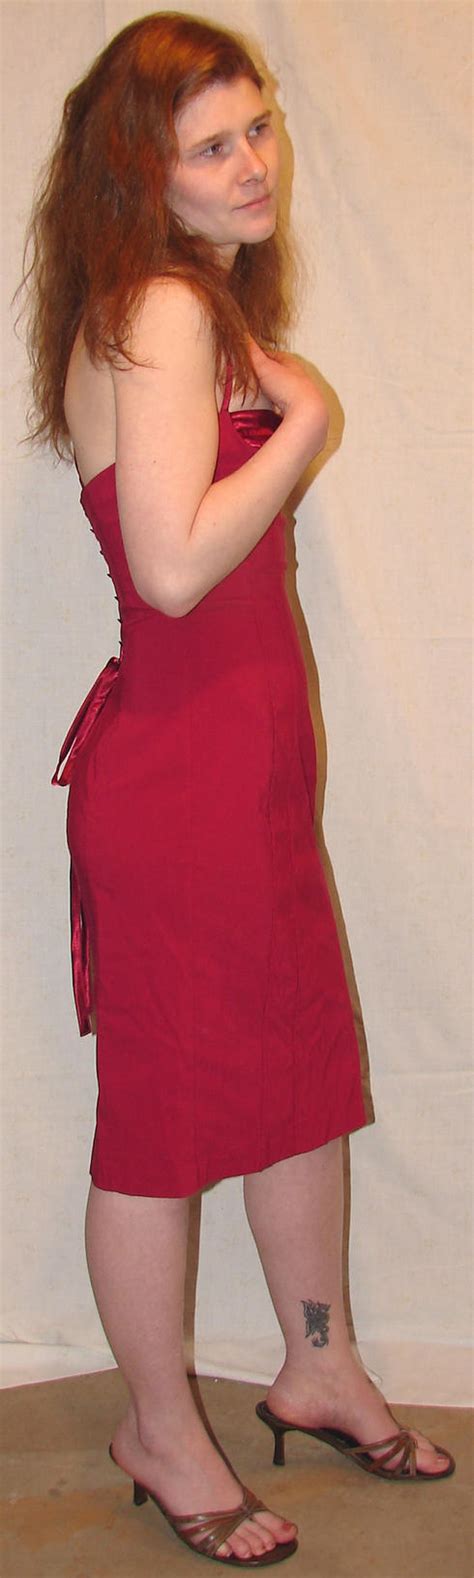 Jodi Sexy Red Dress Pose 03 By Fantasystock On Deviantart